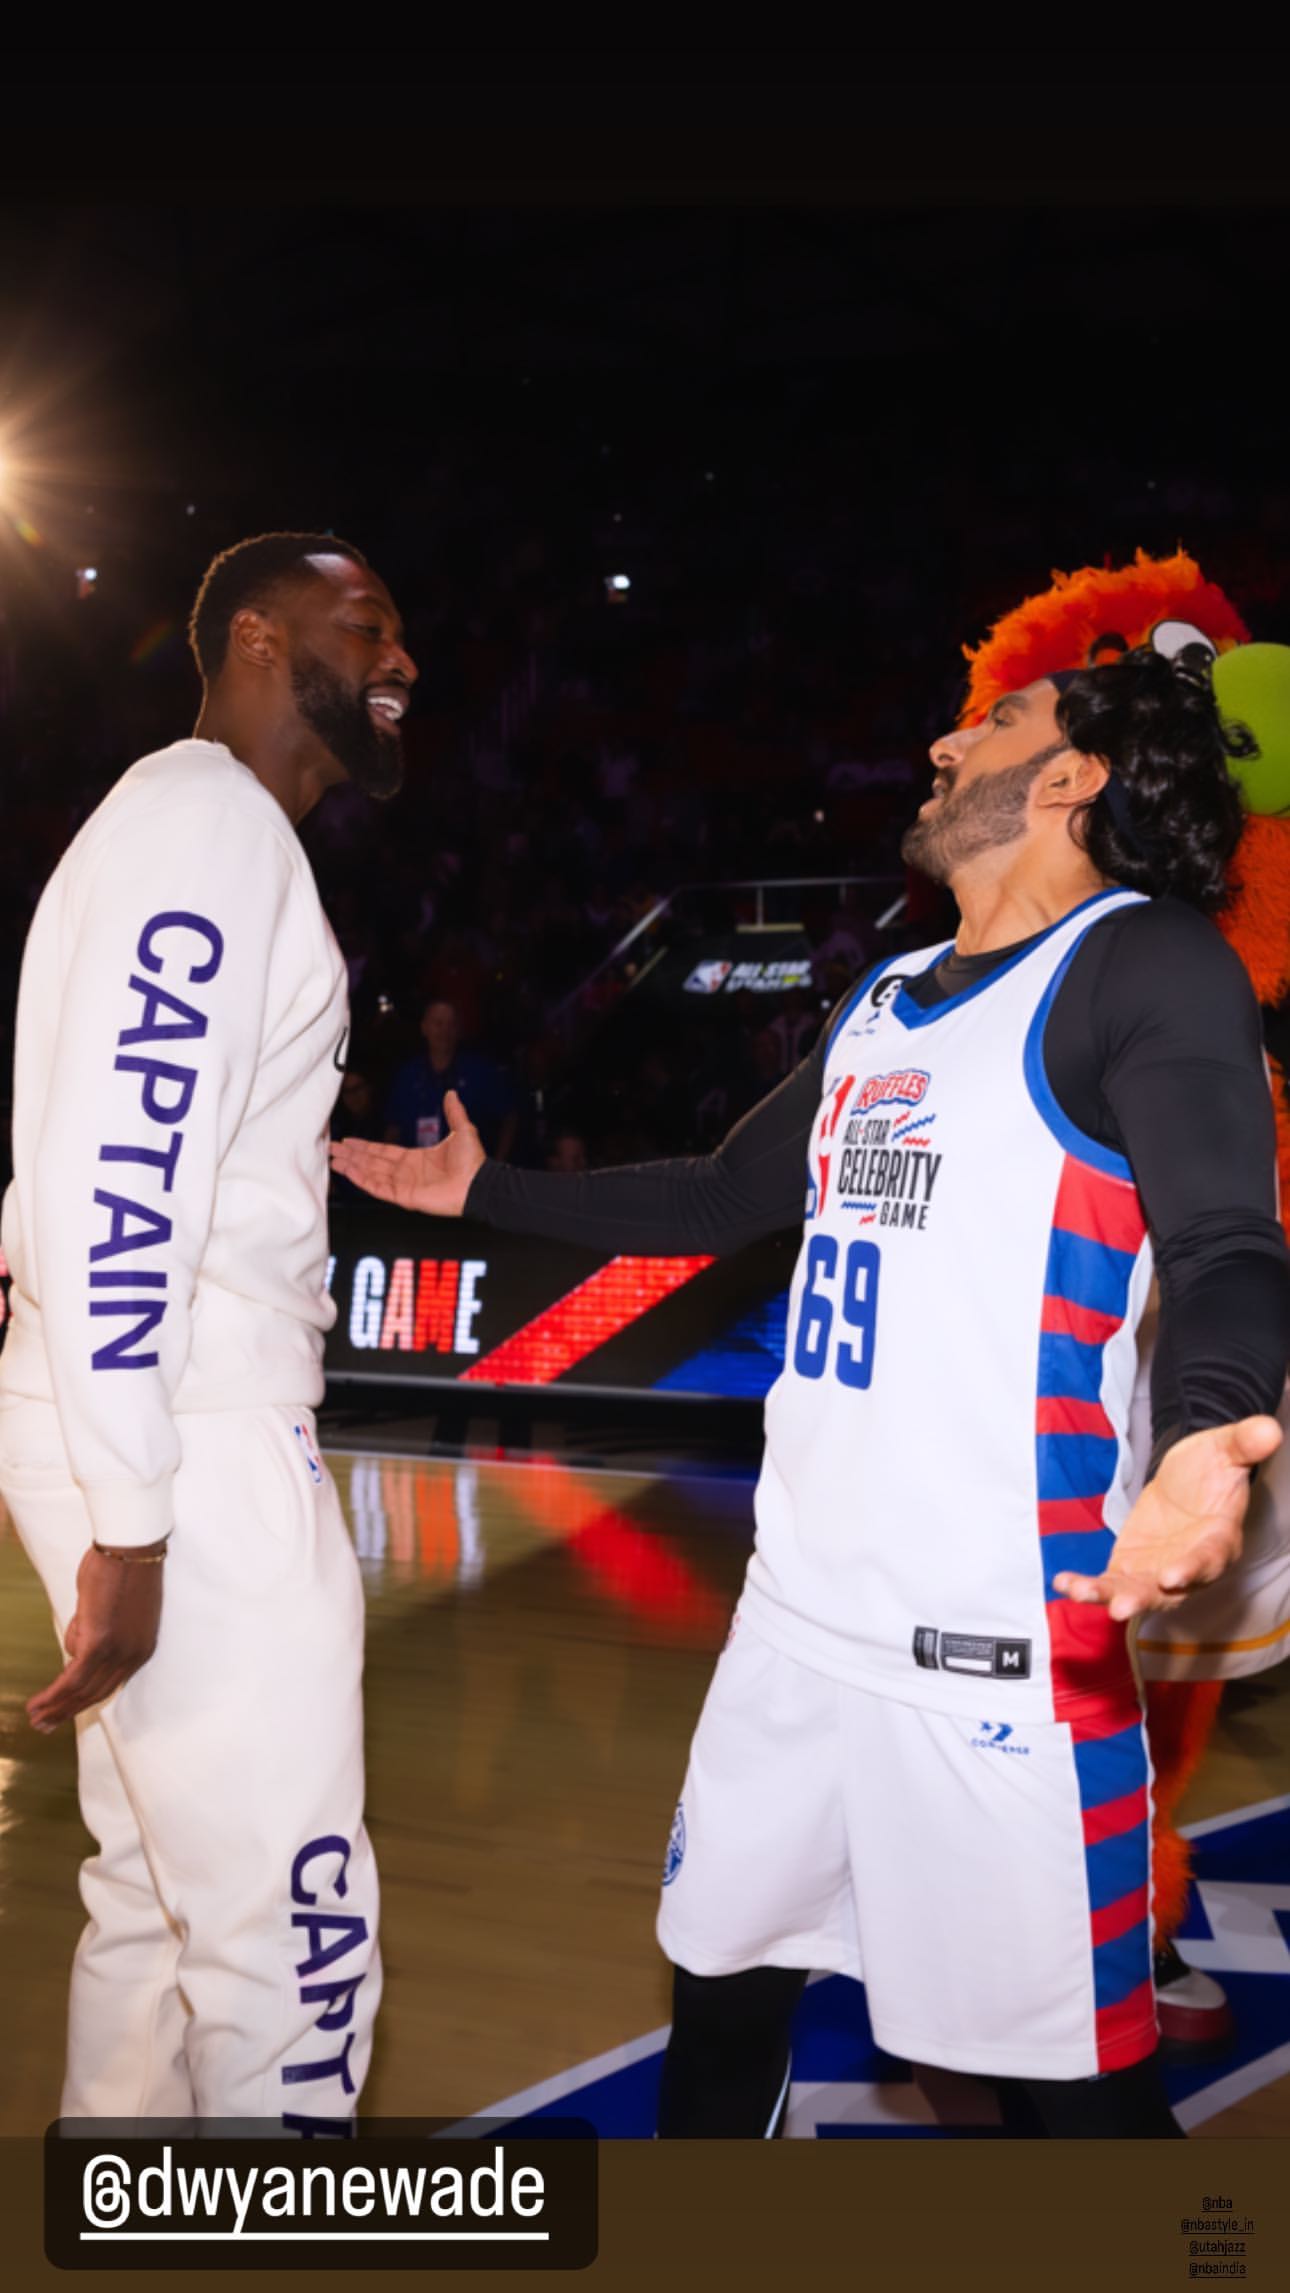 WATCH: Bollywood star Ranveer Singh plays in a NBA All-Star game